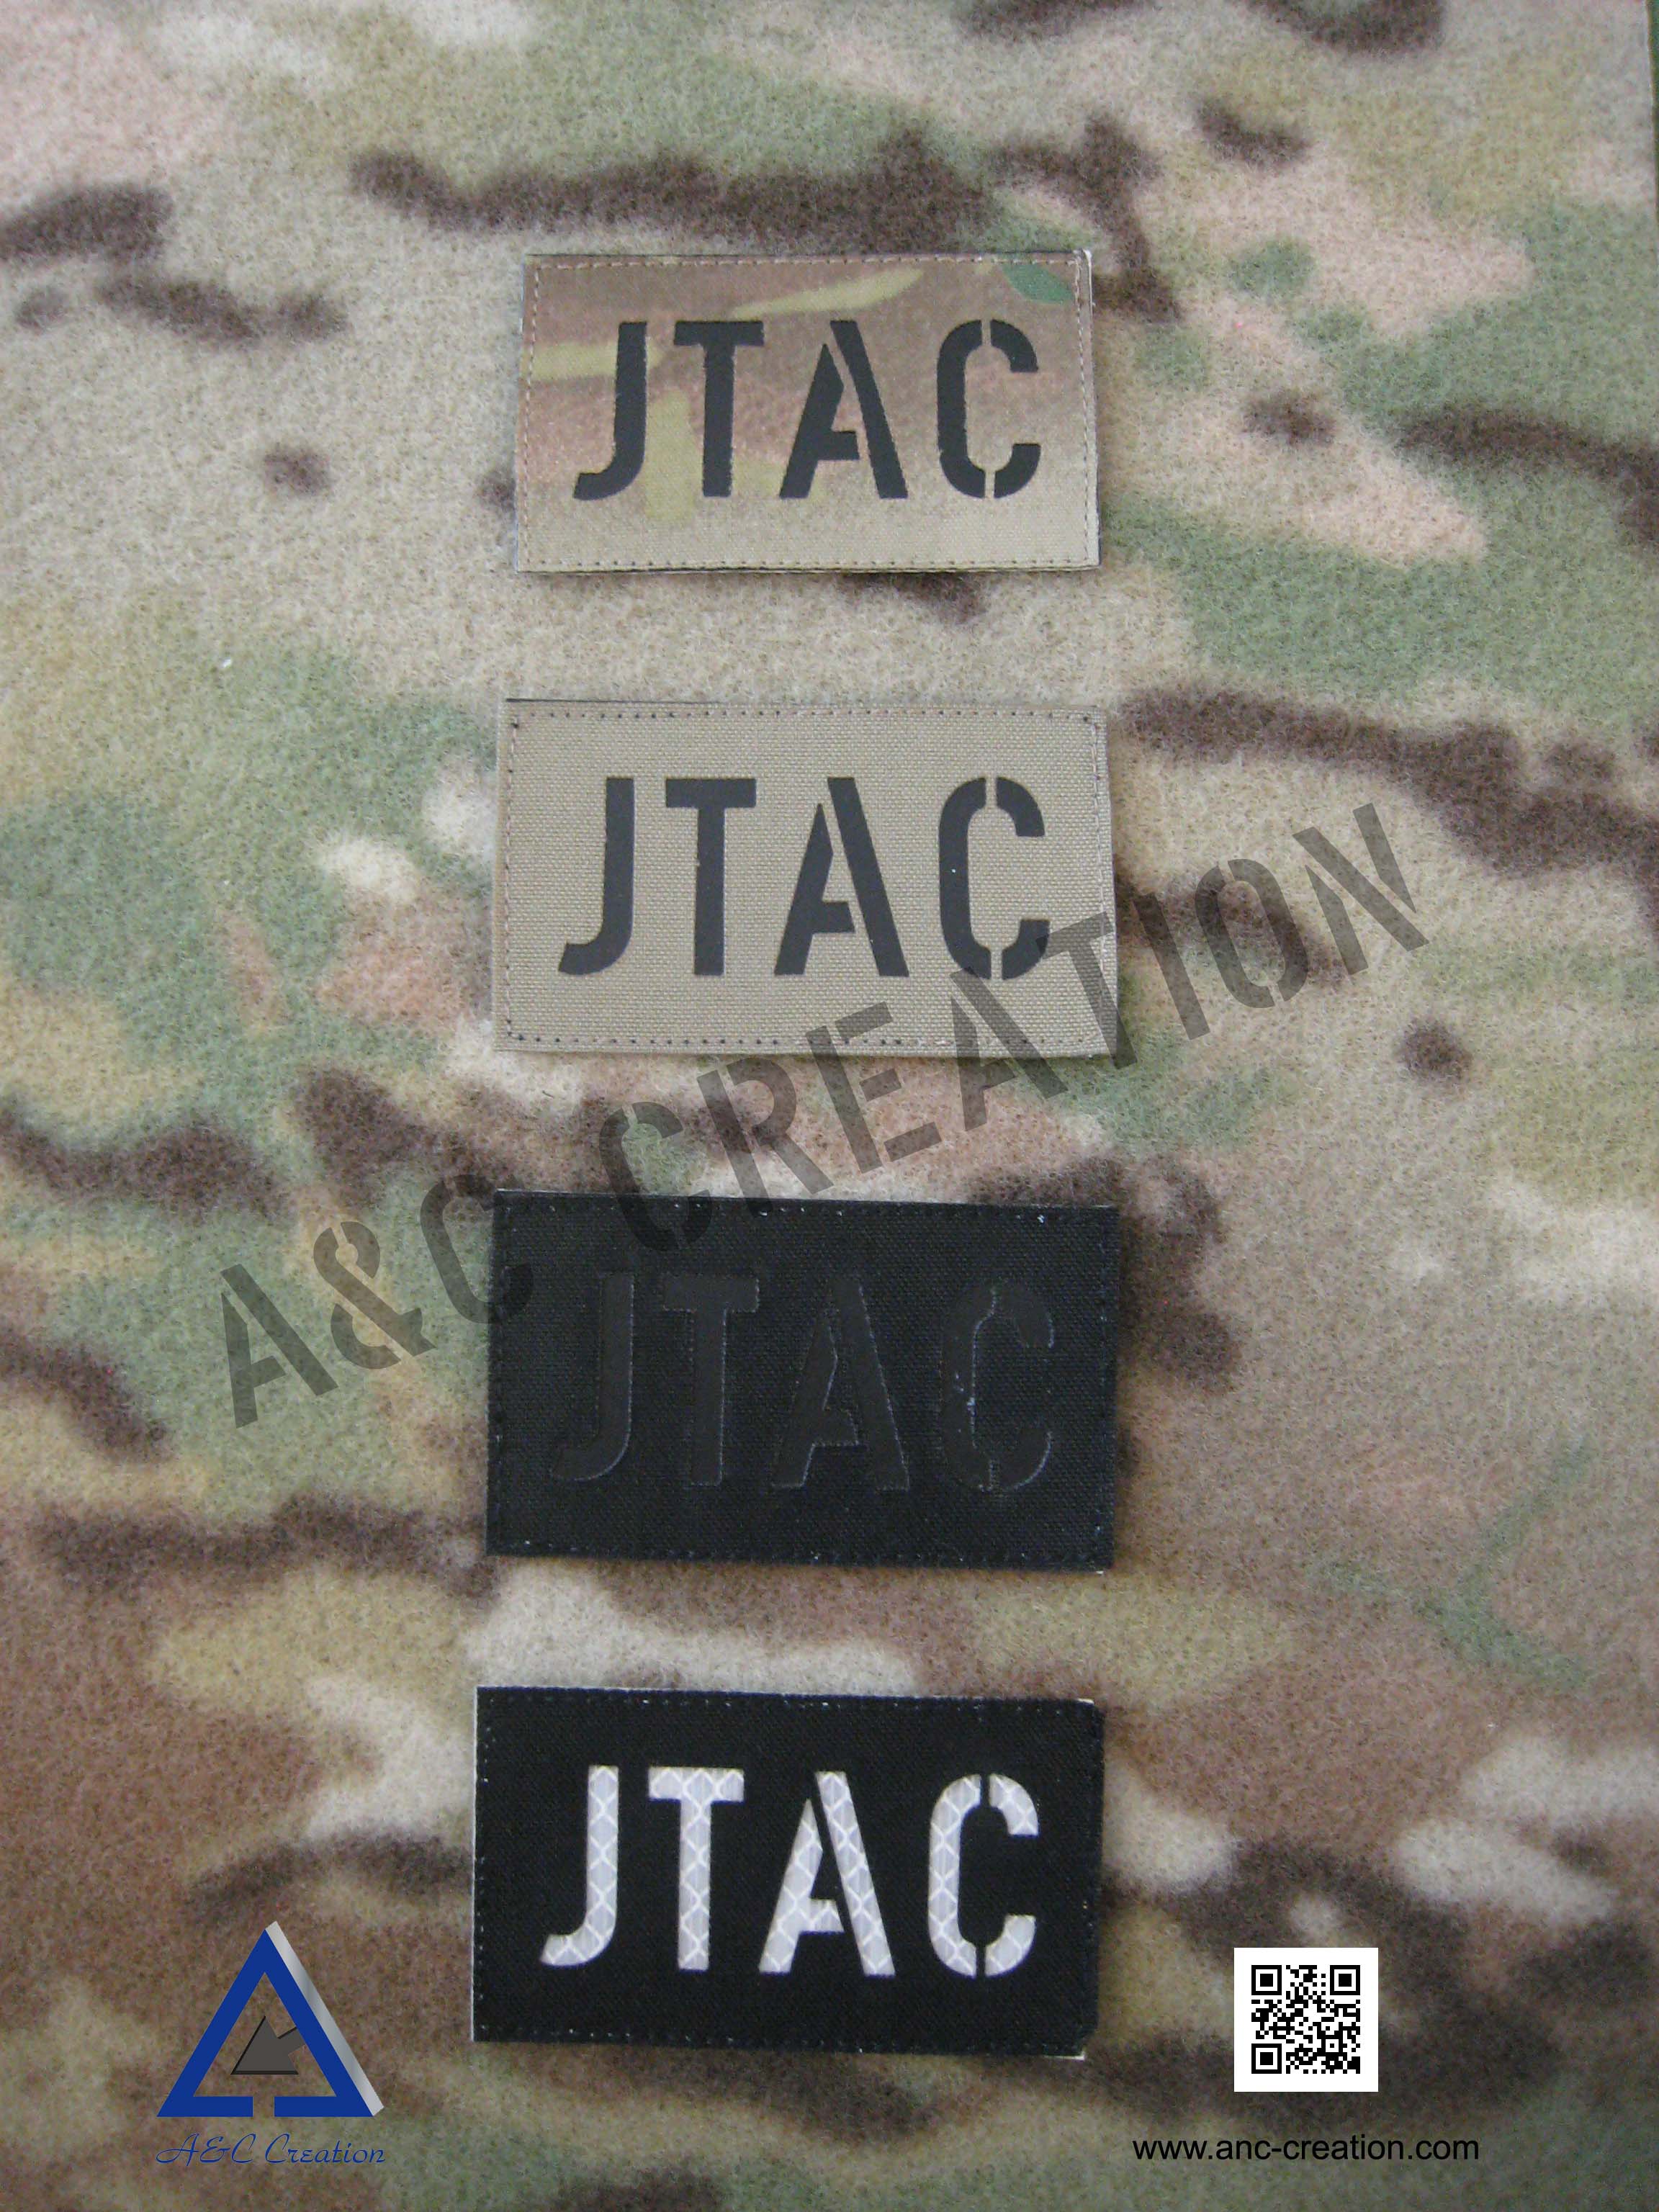 PM009Av-JTAC IR (Infra Red) Joint Terminal Attack Controller (JTAC) Patch